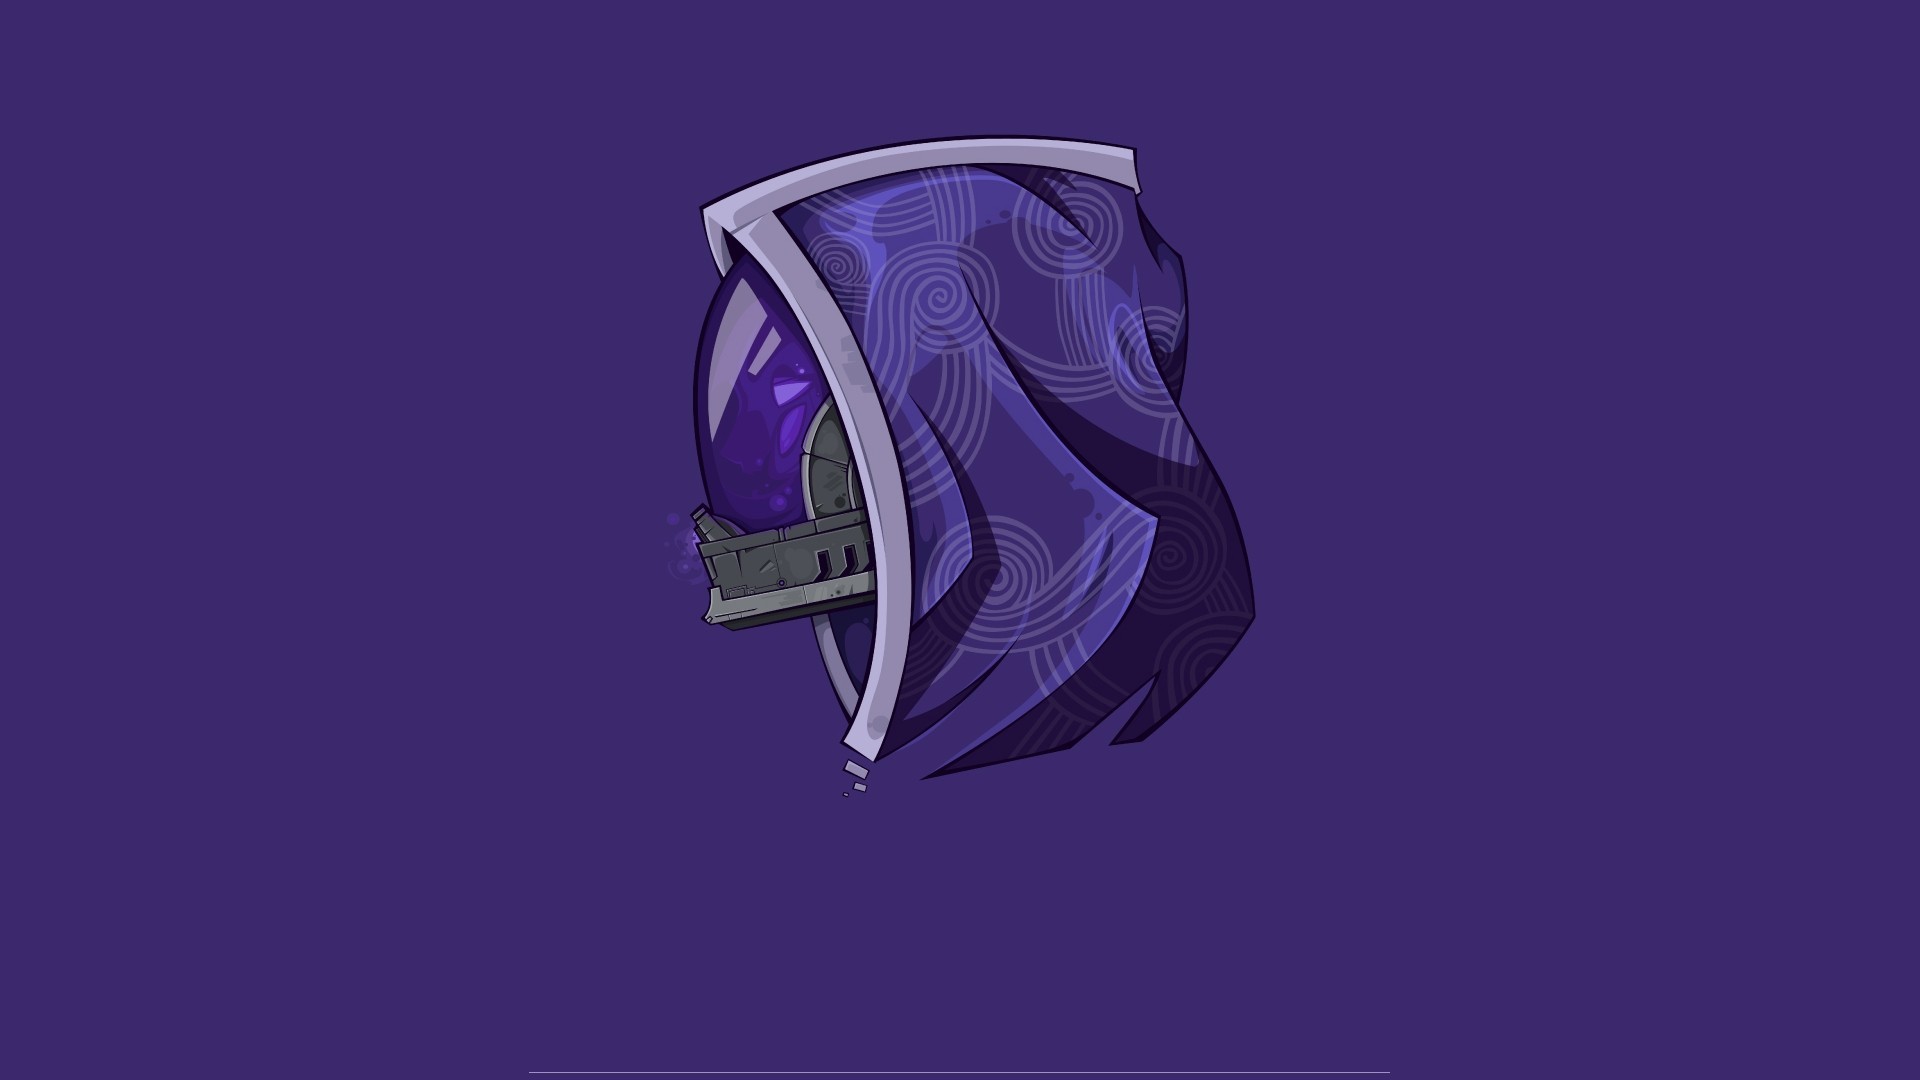 General 1920x1080 Mass Effect minimalism helmet science fiction artwork simple background video games Tali'Zorah purple PC gaming video game art purple background